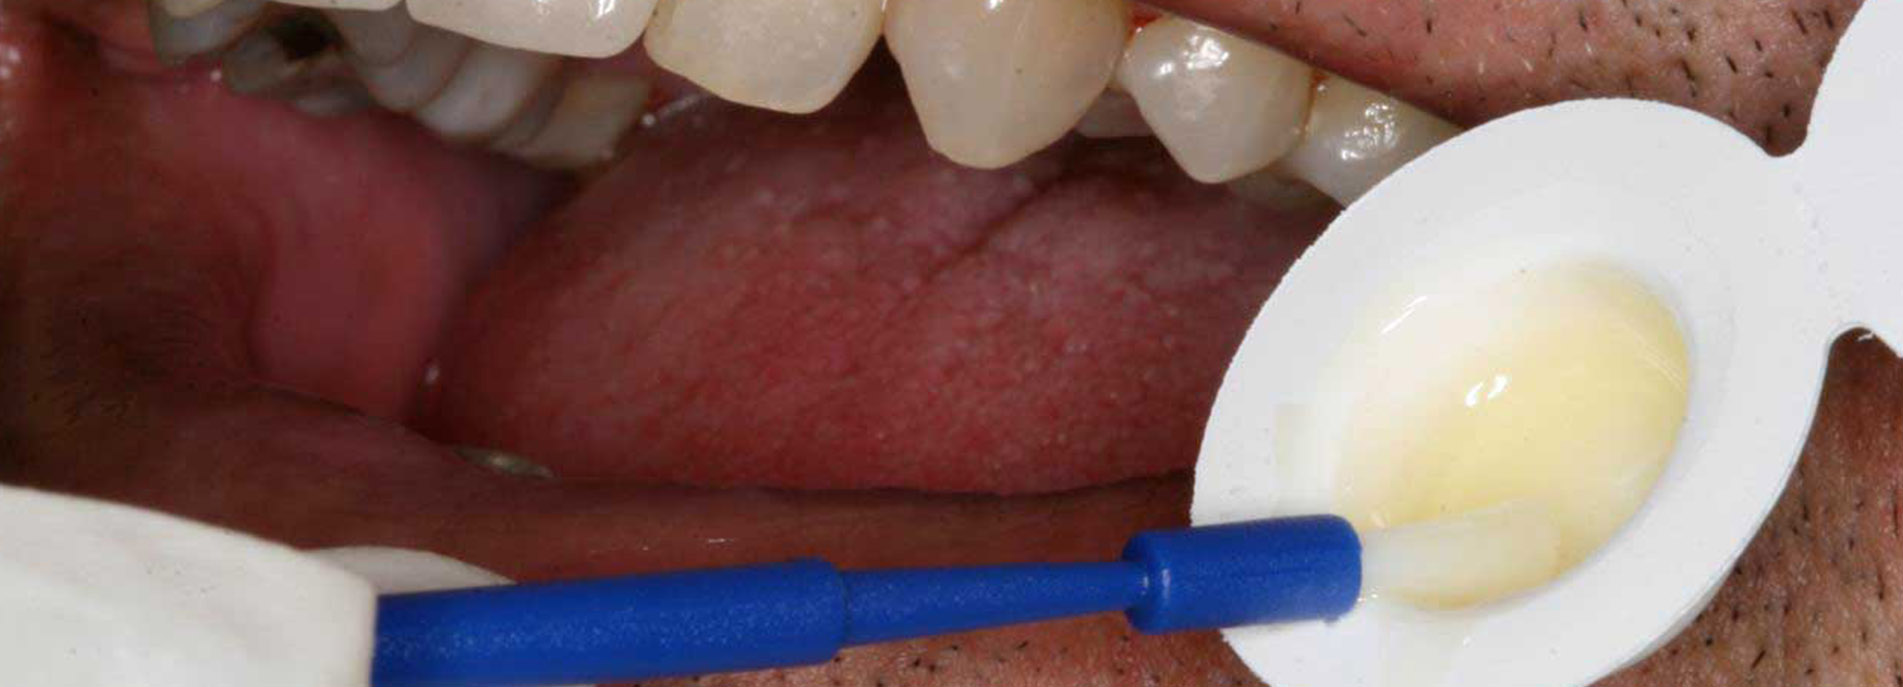 Teeth Fluoride Therapy in Dentistry in delhi